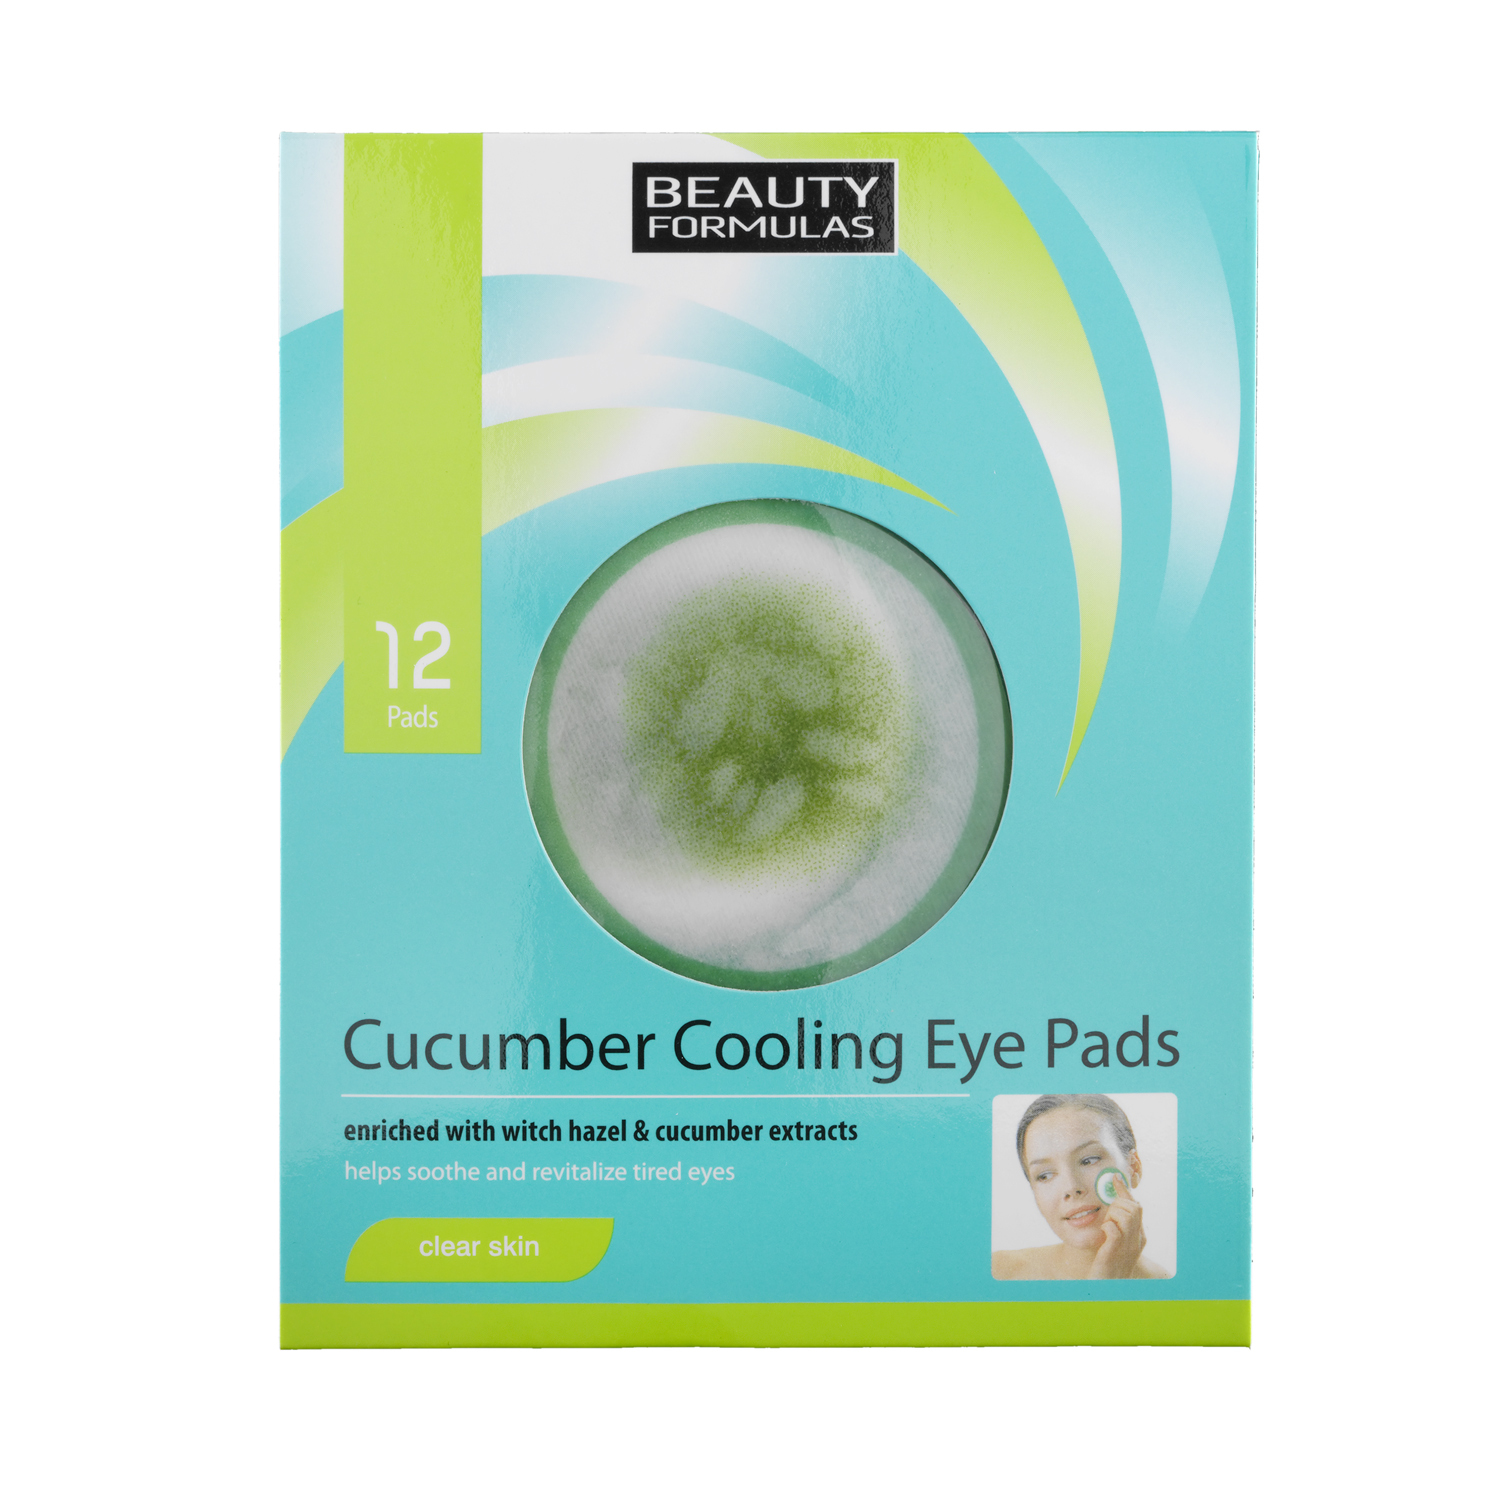 Beauty Formulas Cucumber Cooling Eye Pads Image